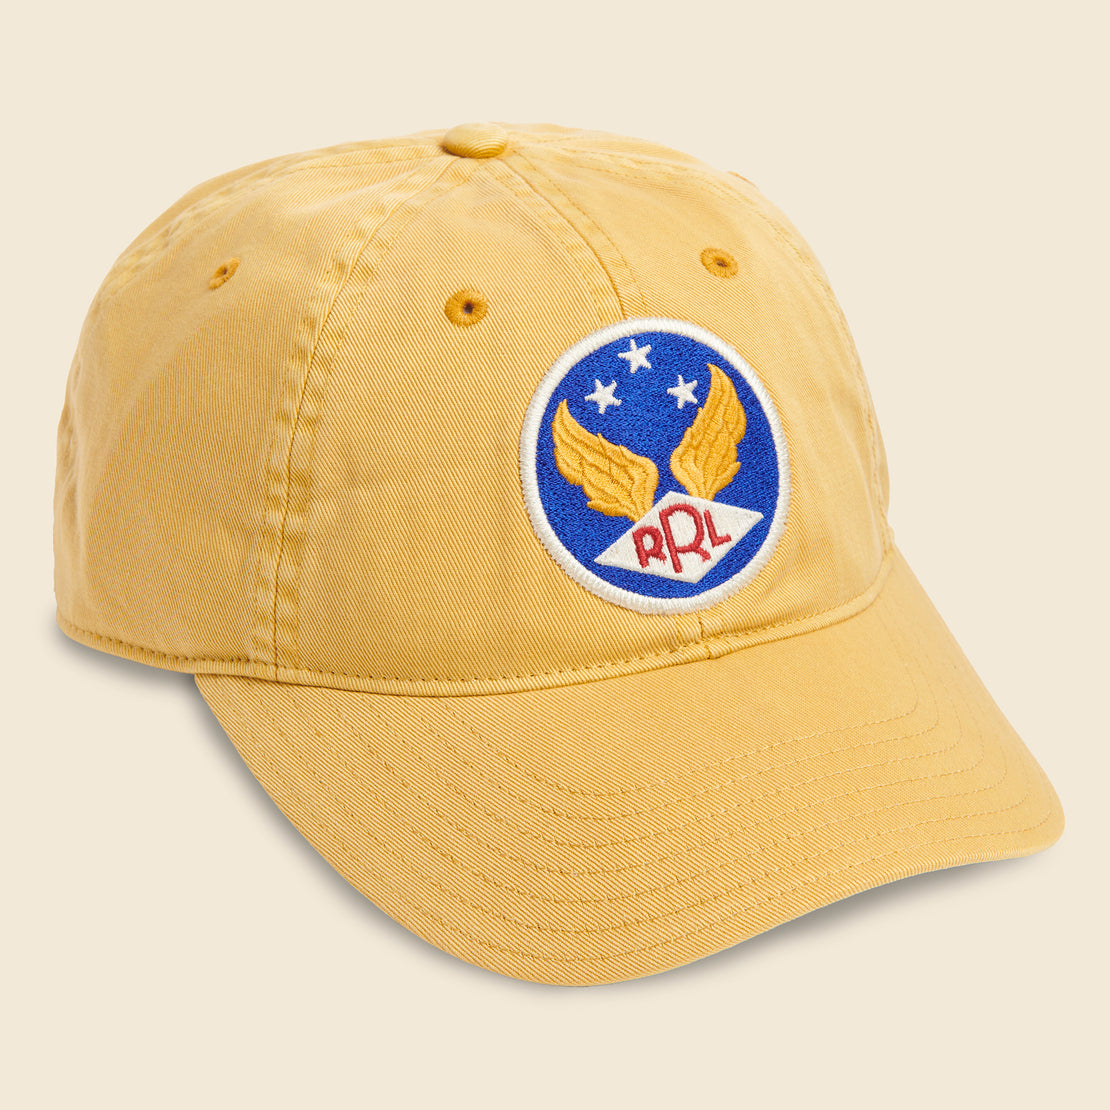 RRL Ball Cap - Antique Gold